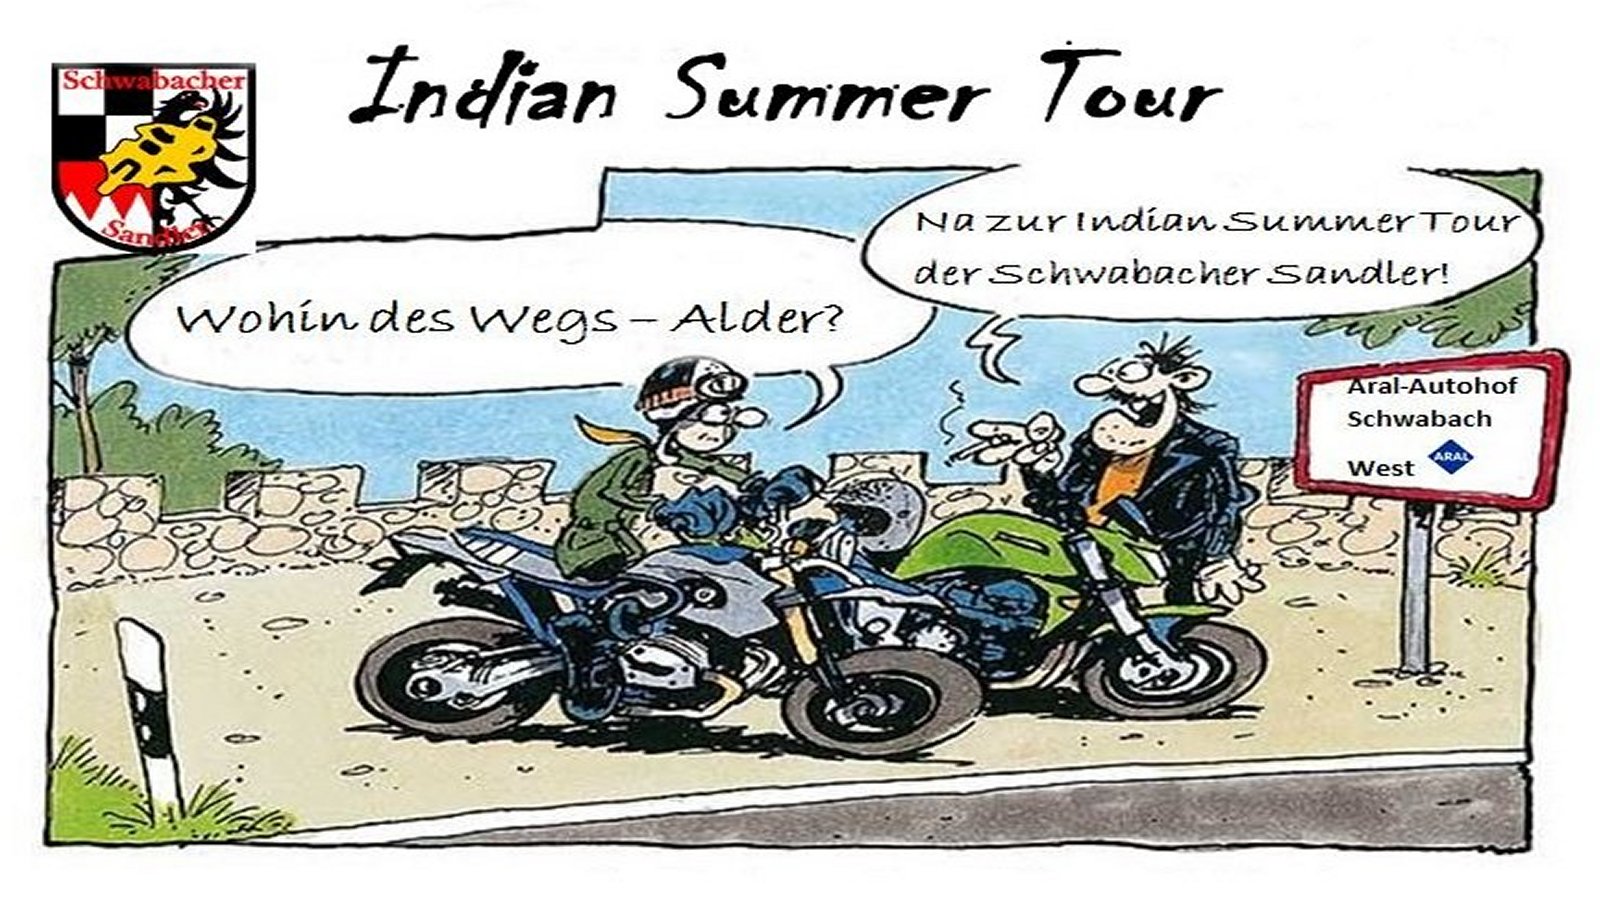 7 Indian Summer Tour web